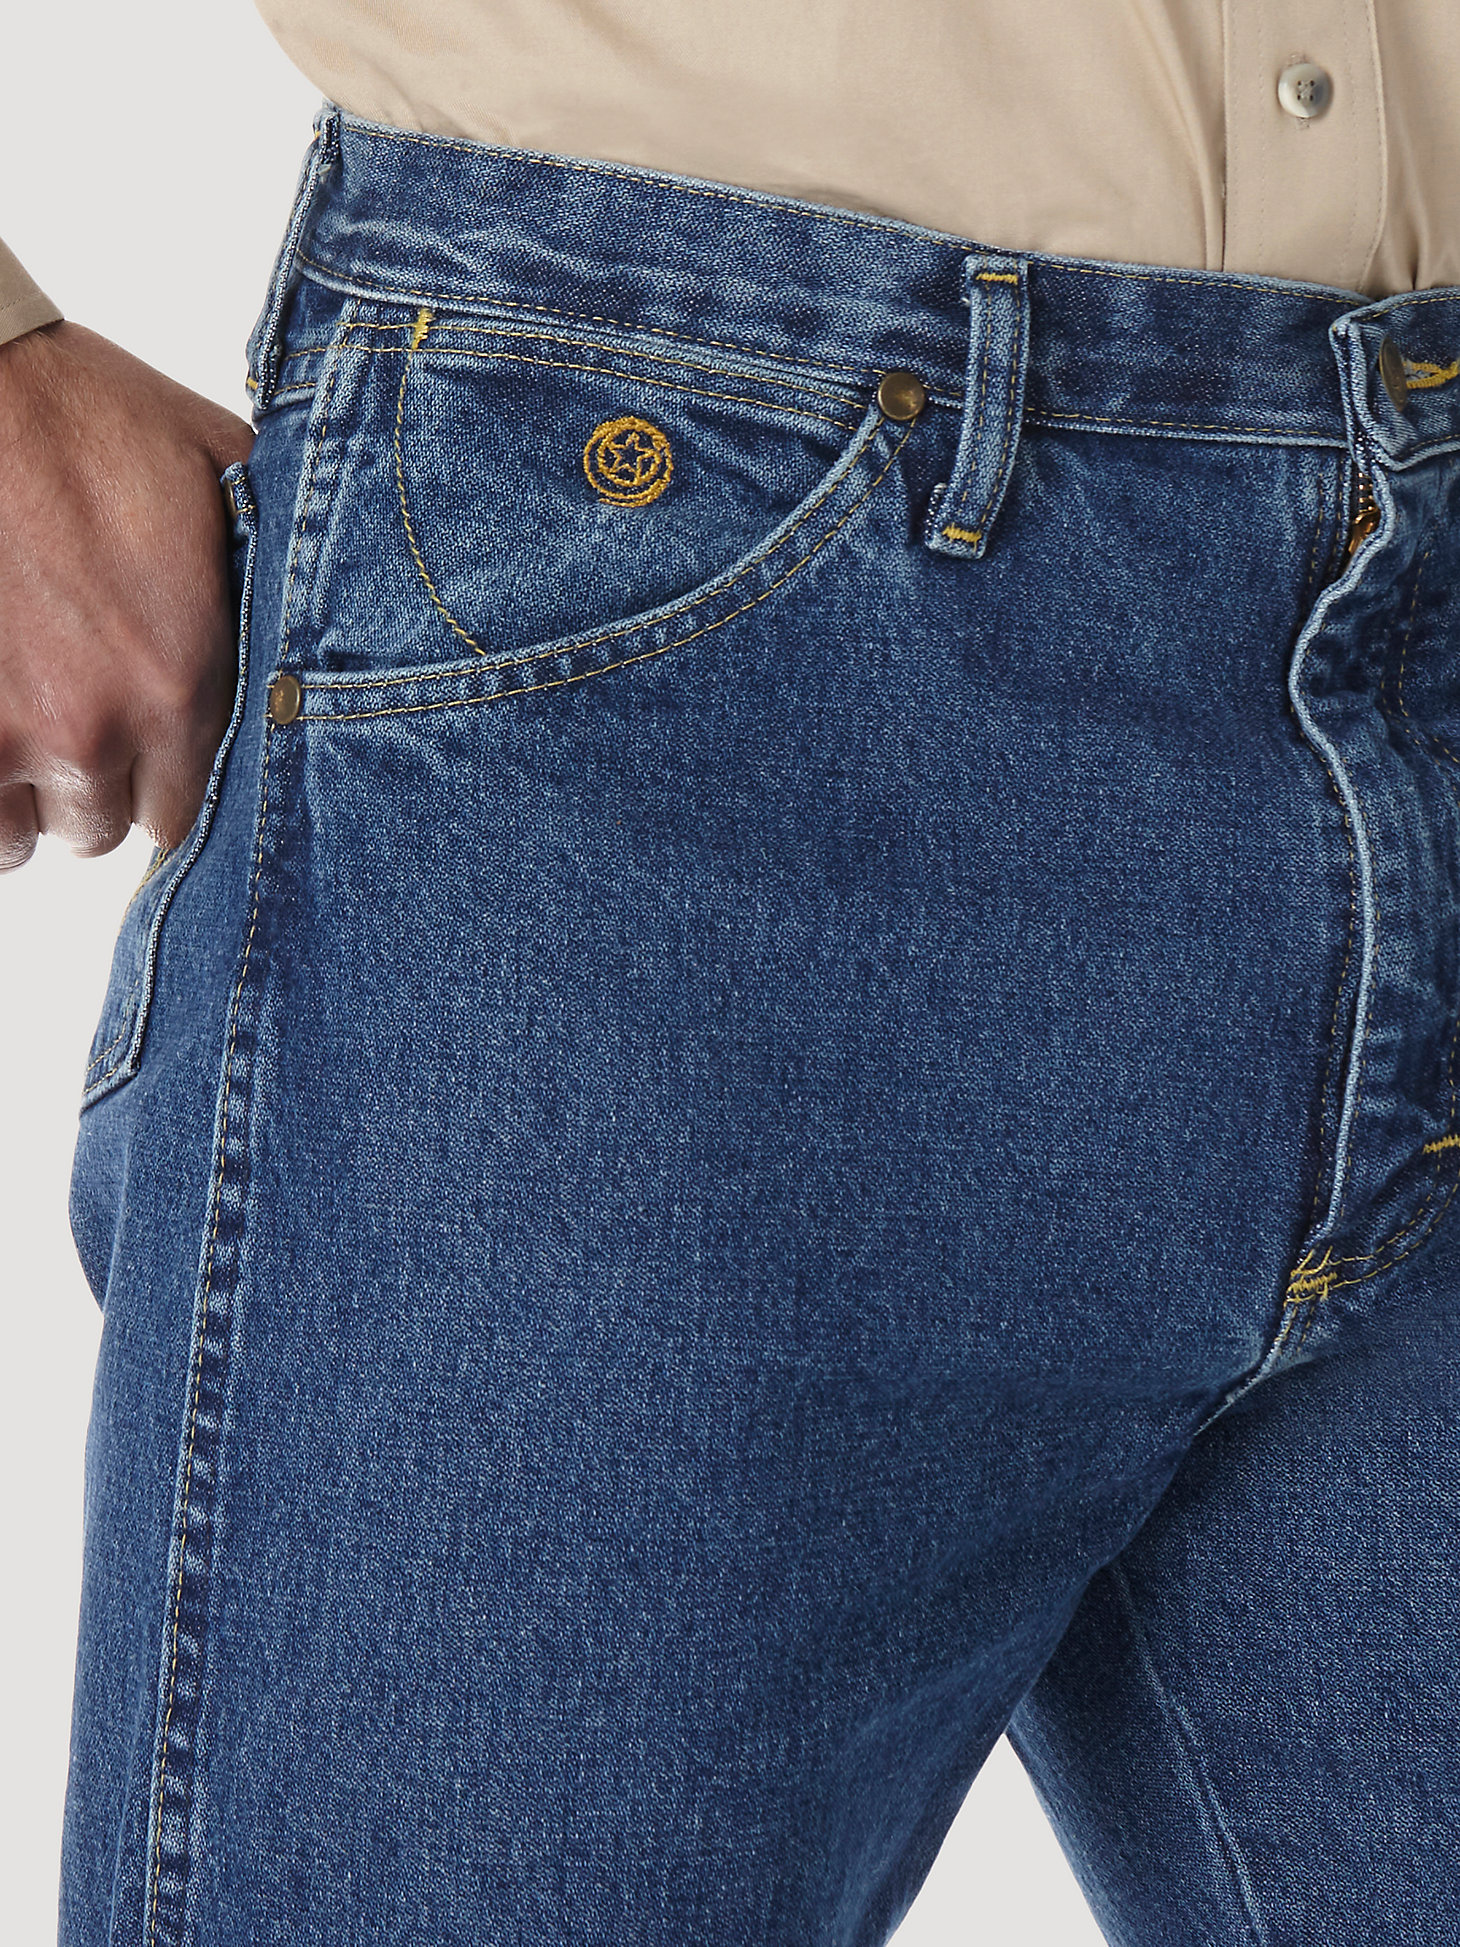 George Strait Cowboy Cut® Original Fit Jean in Heavyweight Stone Denim alternative view 4